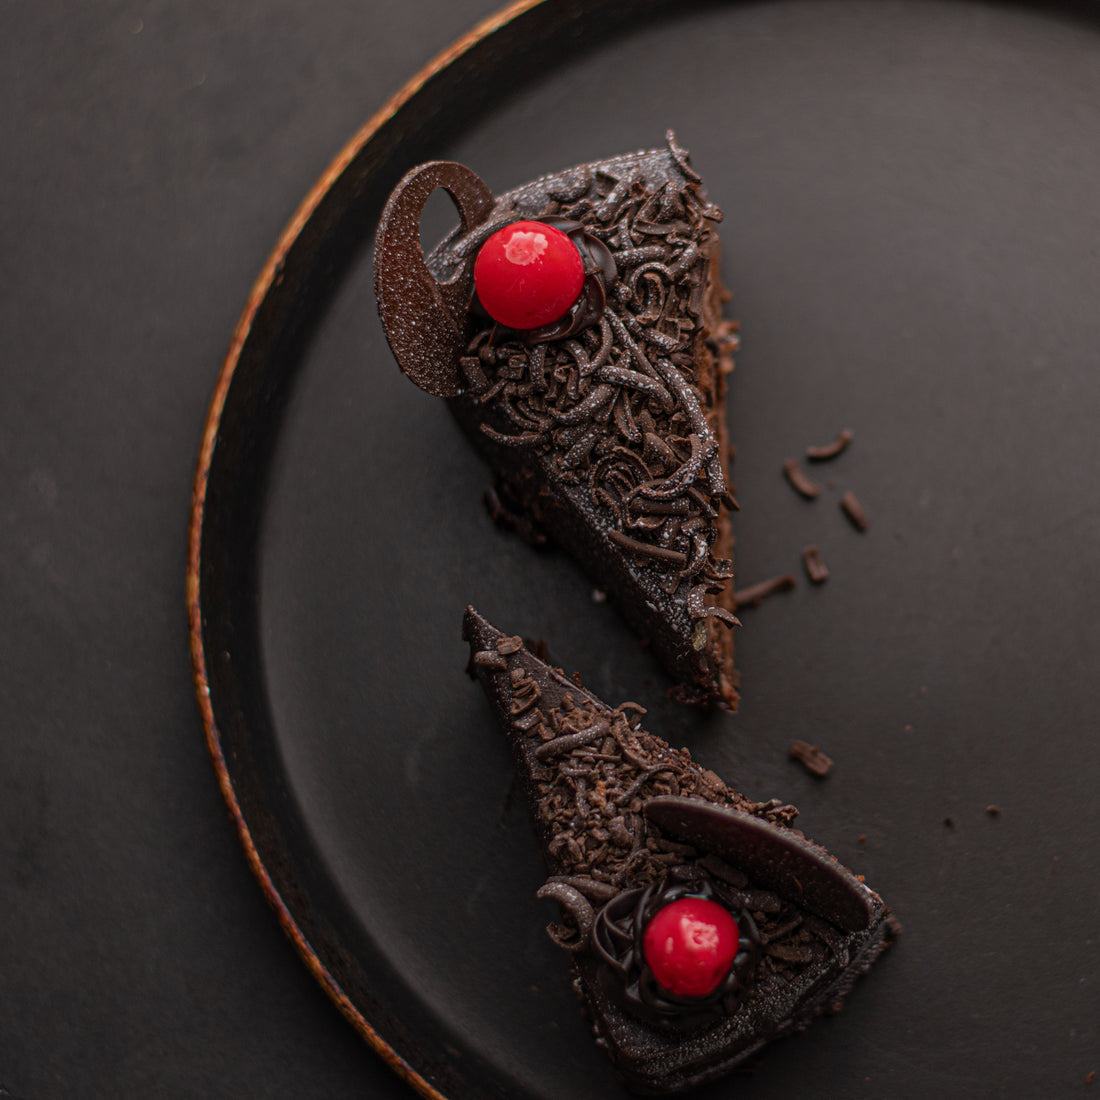 XOCOLATL Recipes, Chapter 1: Classic Chocolate Cakes